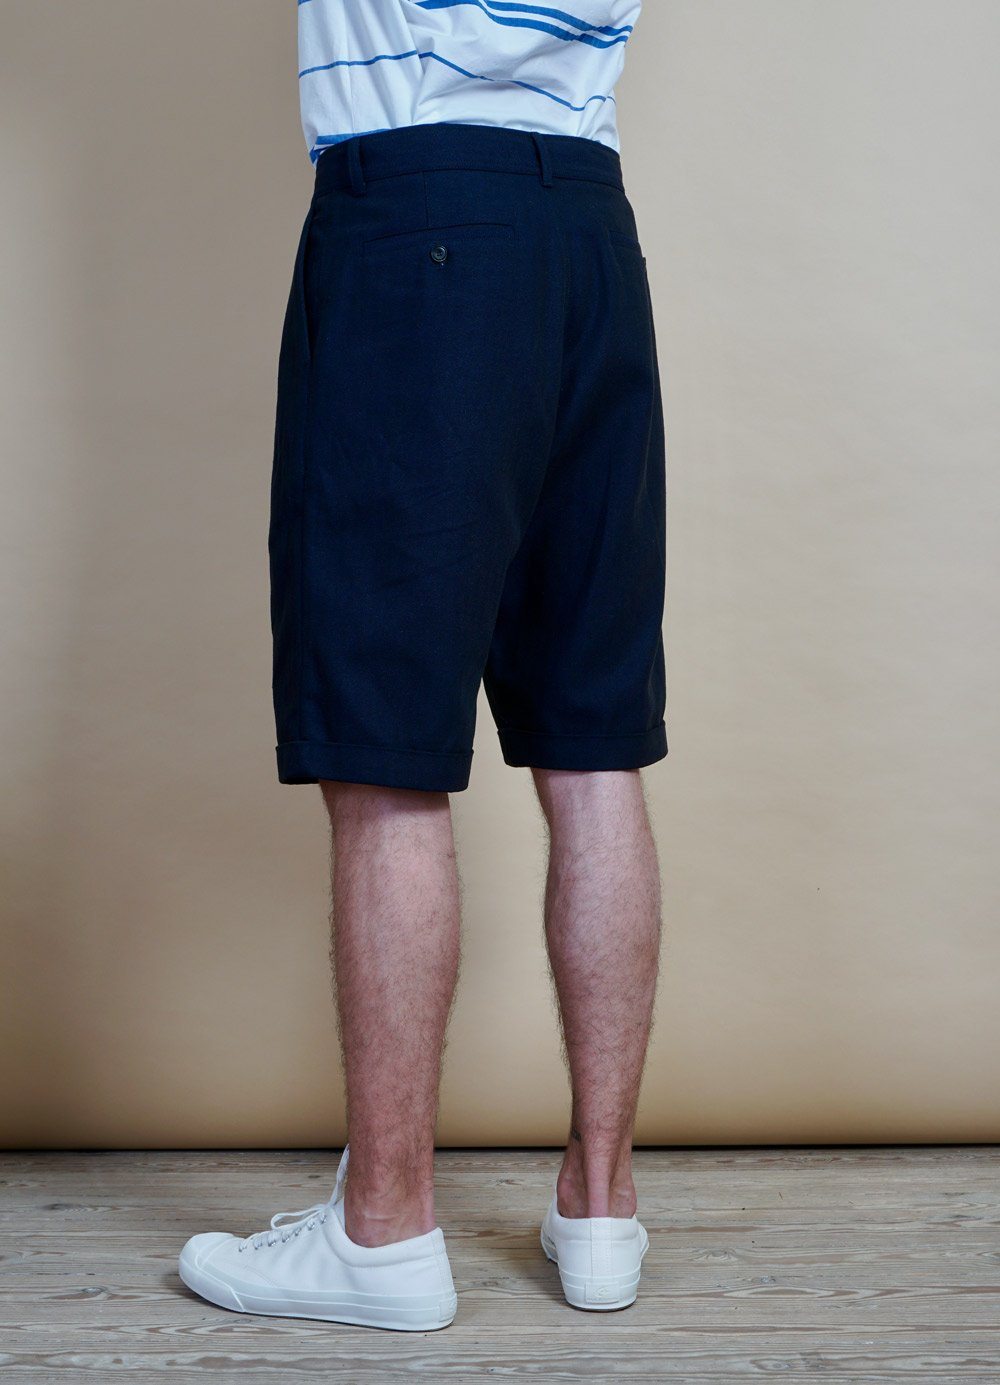 HANSEN GARMENTS - BIRK | Single Pleated Shorts | Indigo - HANSEN Garments